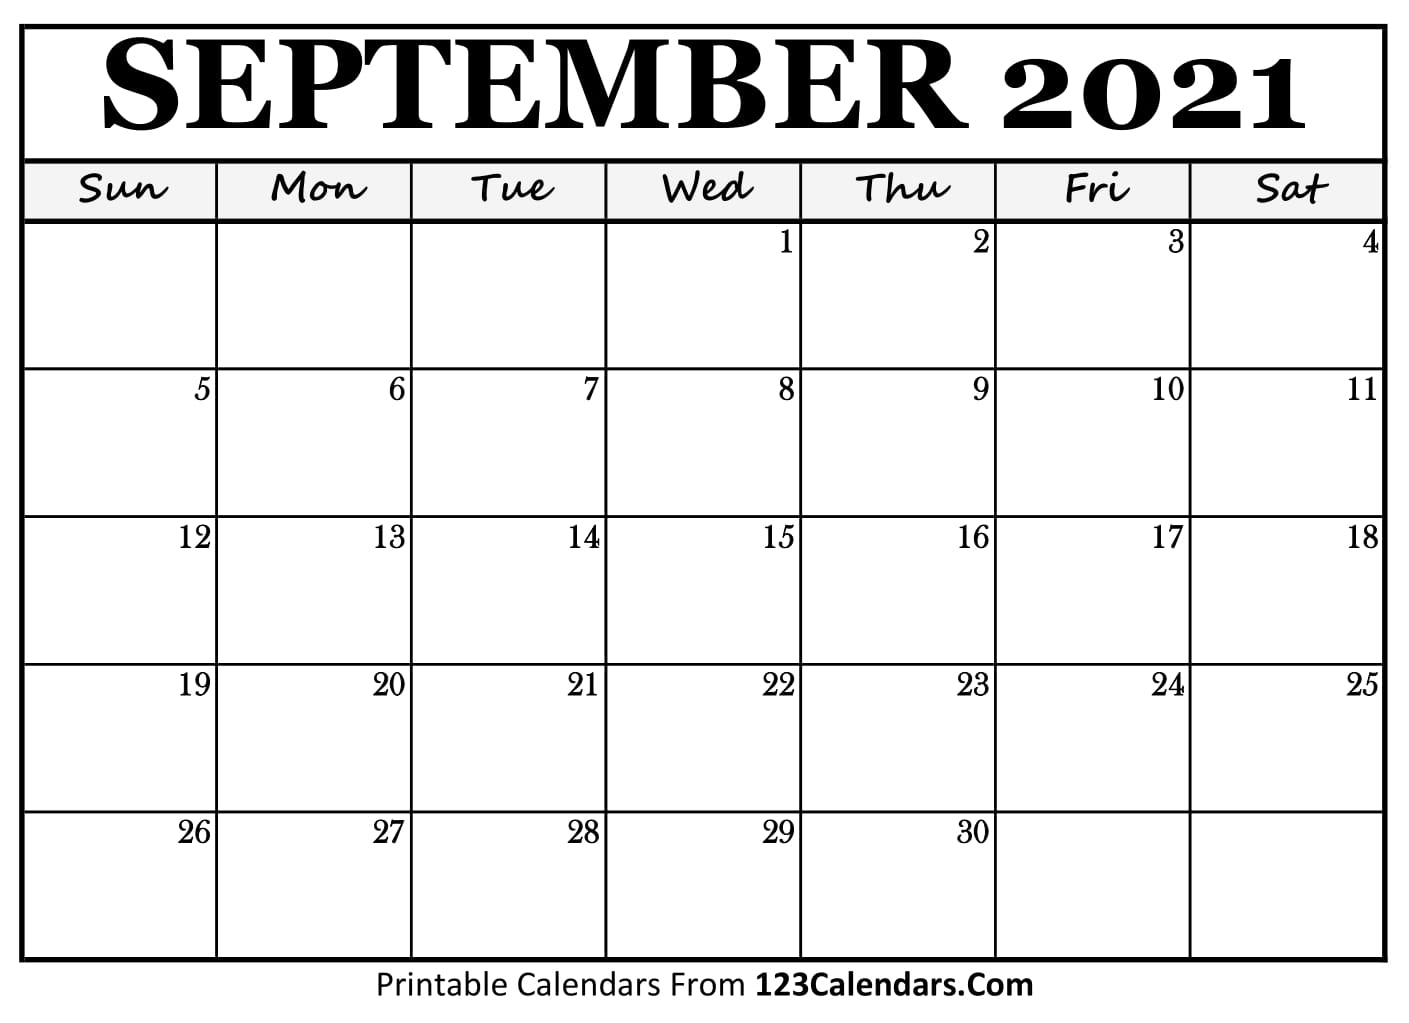 Printable September 2021 Calendar Templates - 123Calendars